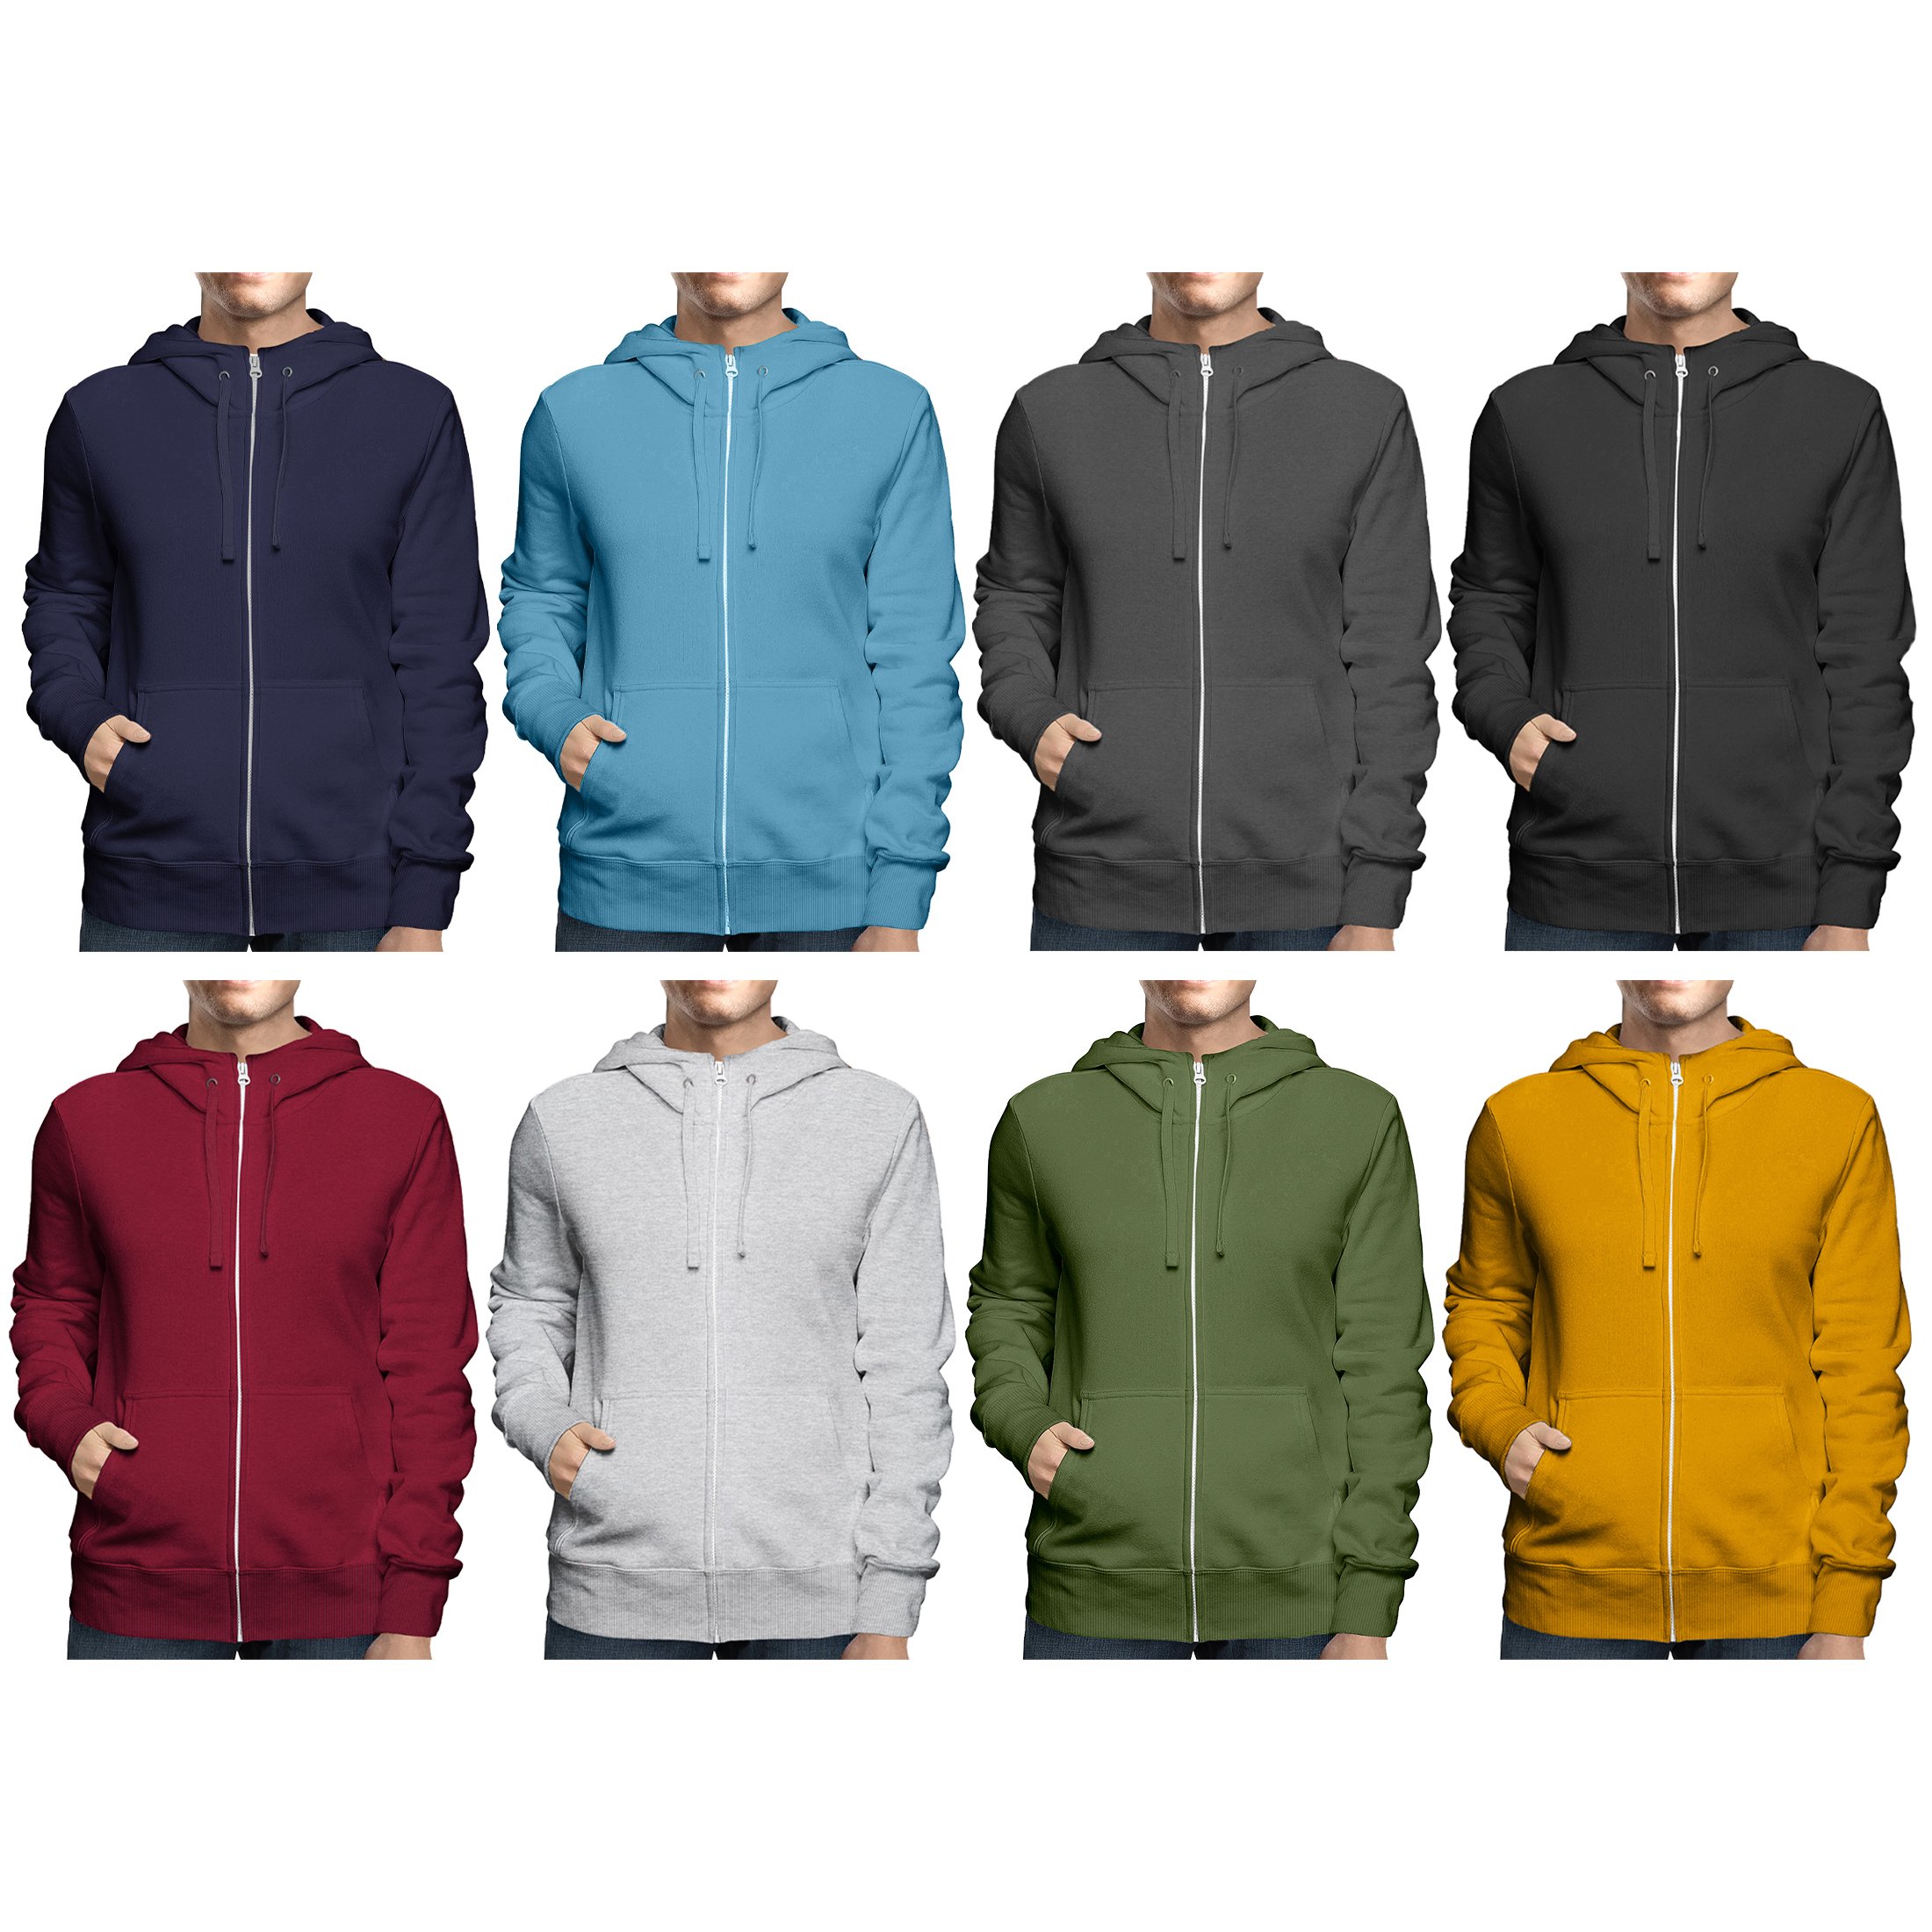 2-Pack: Men's Full Zip Up Fleece-Lined Hoodie Sweatshirt (Big & Tall Size Available) - Navy & Black, X-large